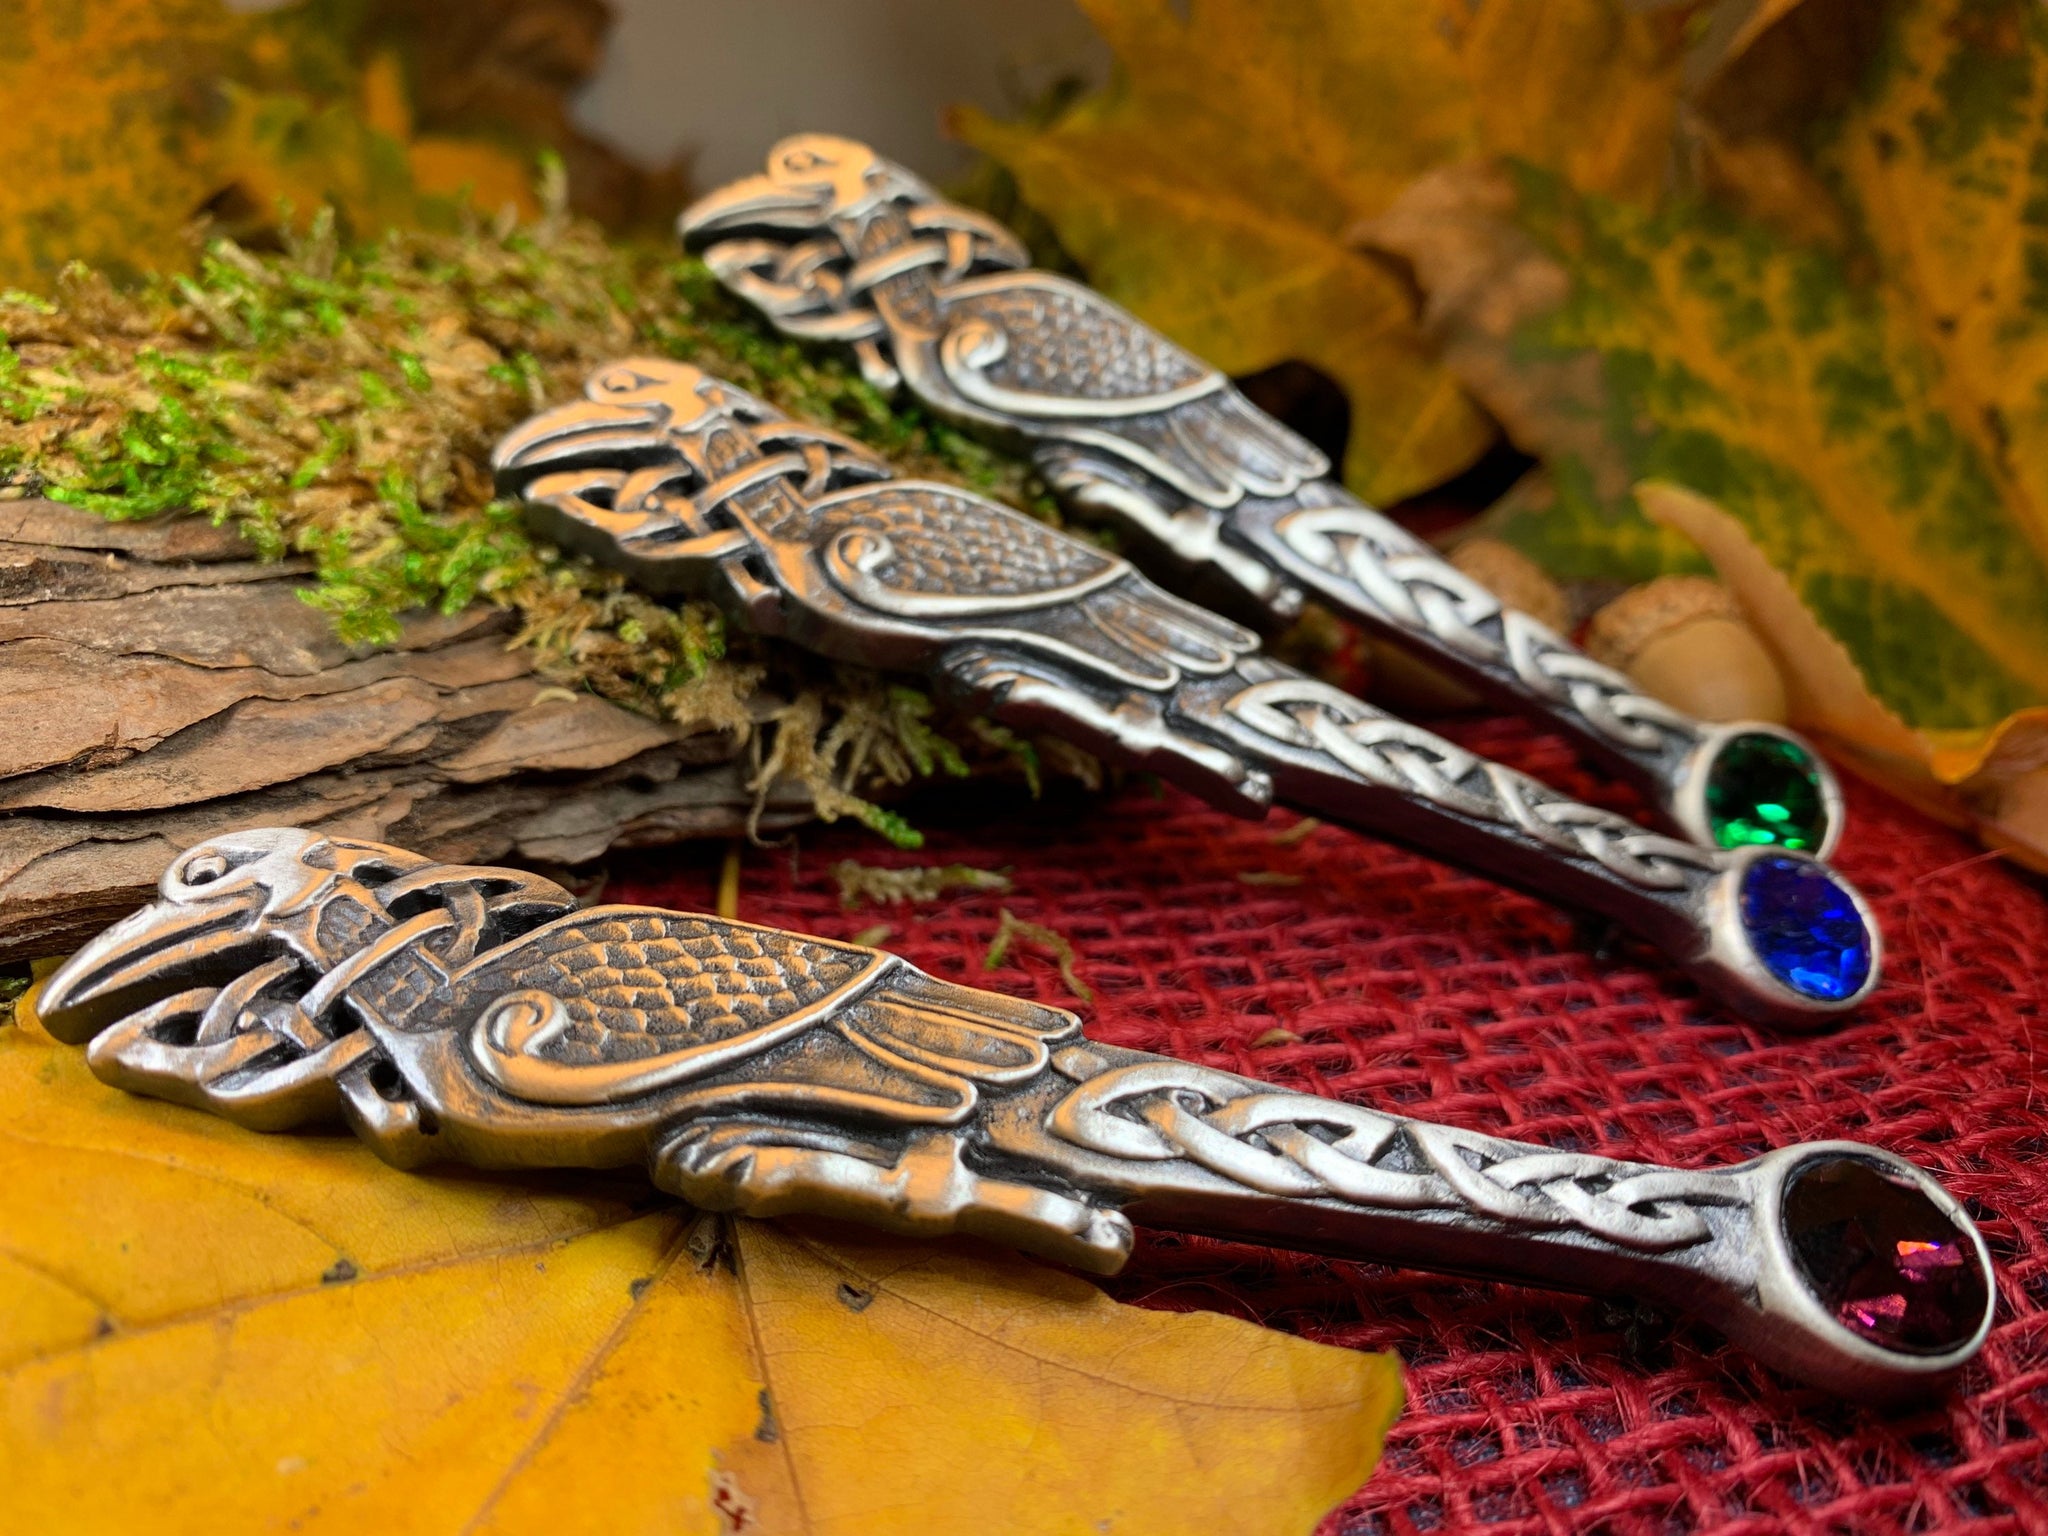 Premium Sword of State Antique Silver Kilt Pin